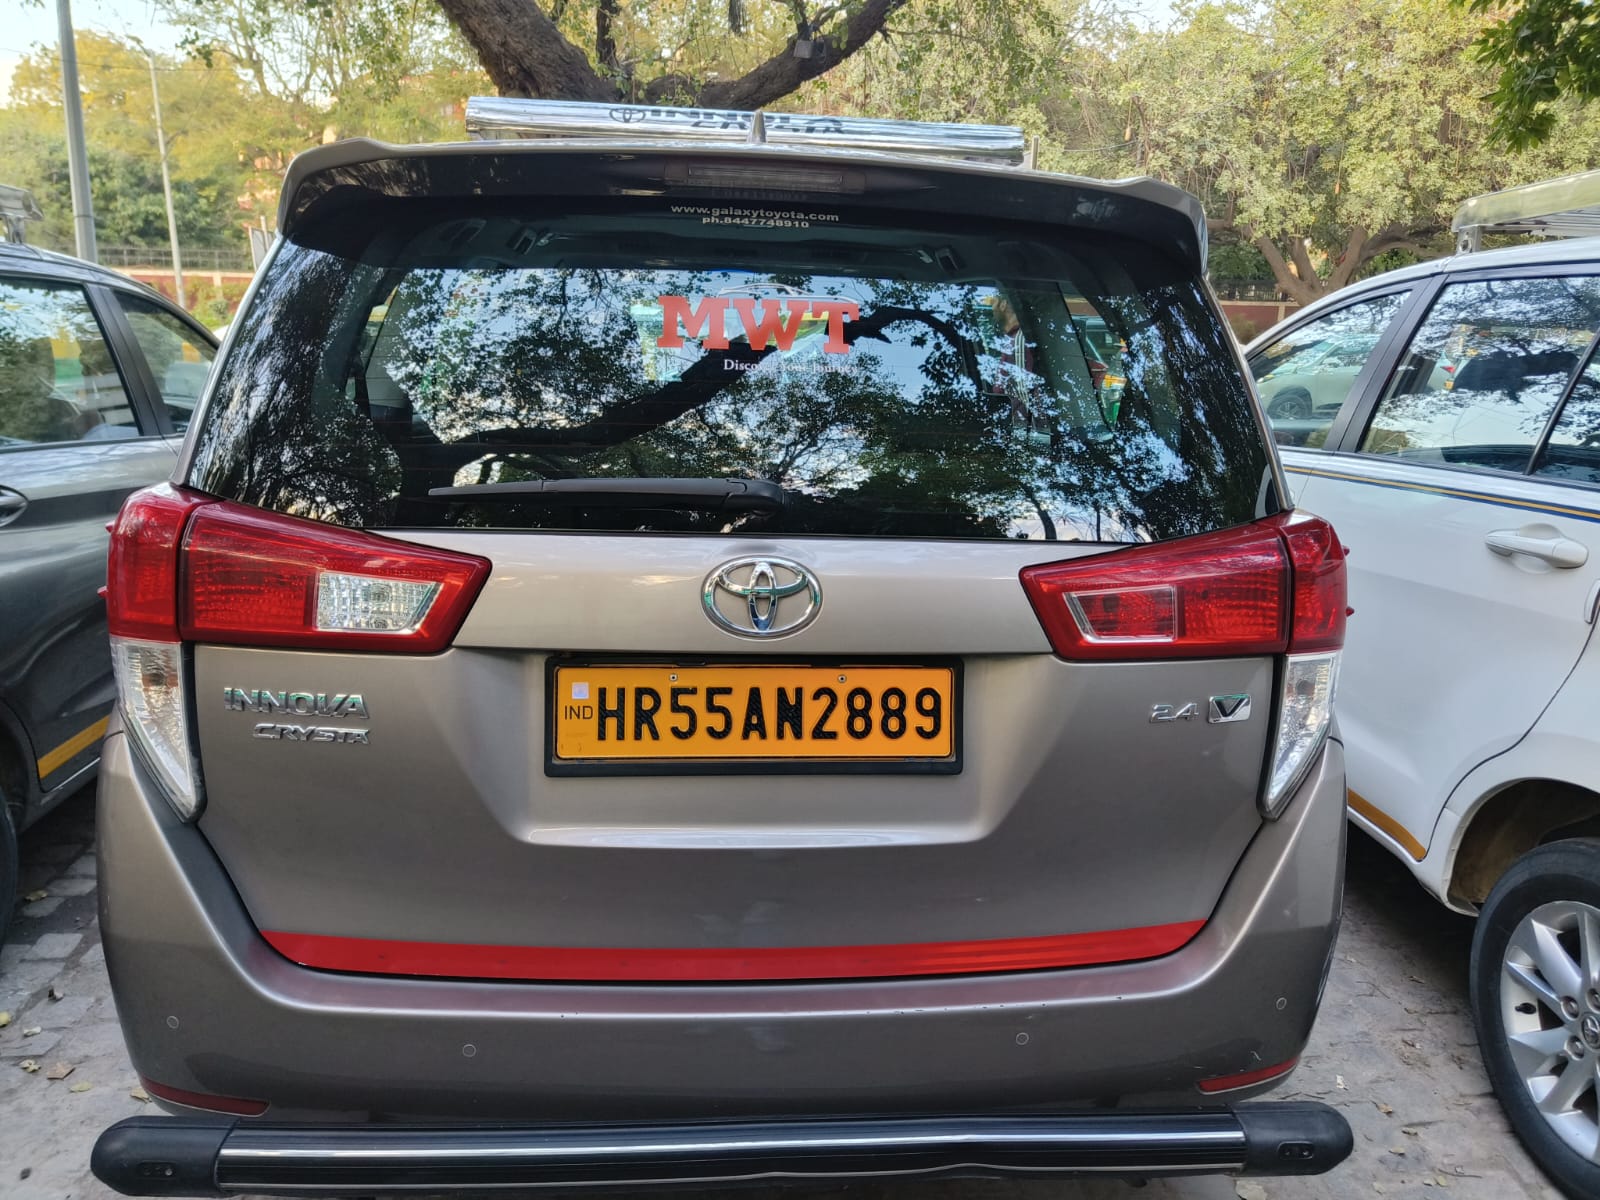 Toyota Innova Crysta Hire Delhi